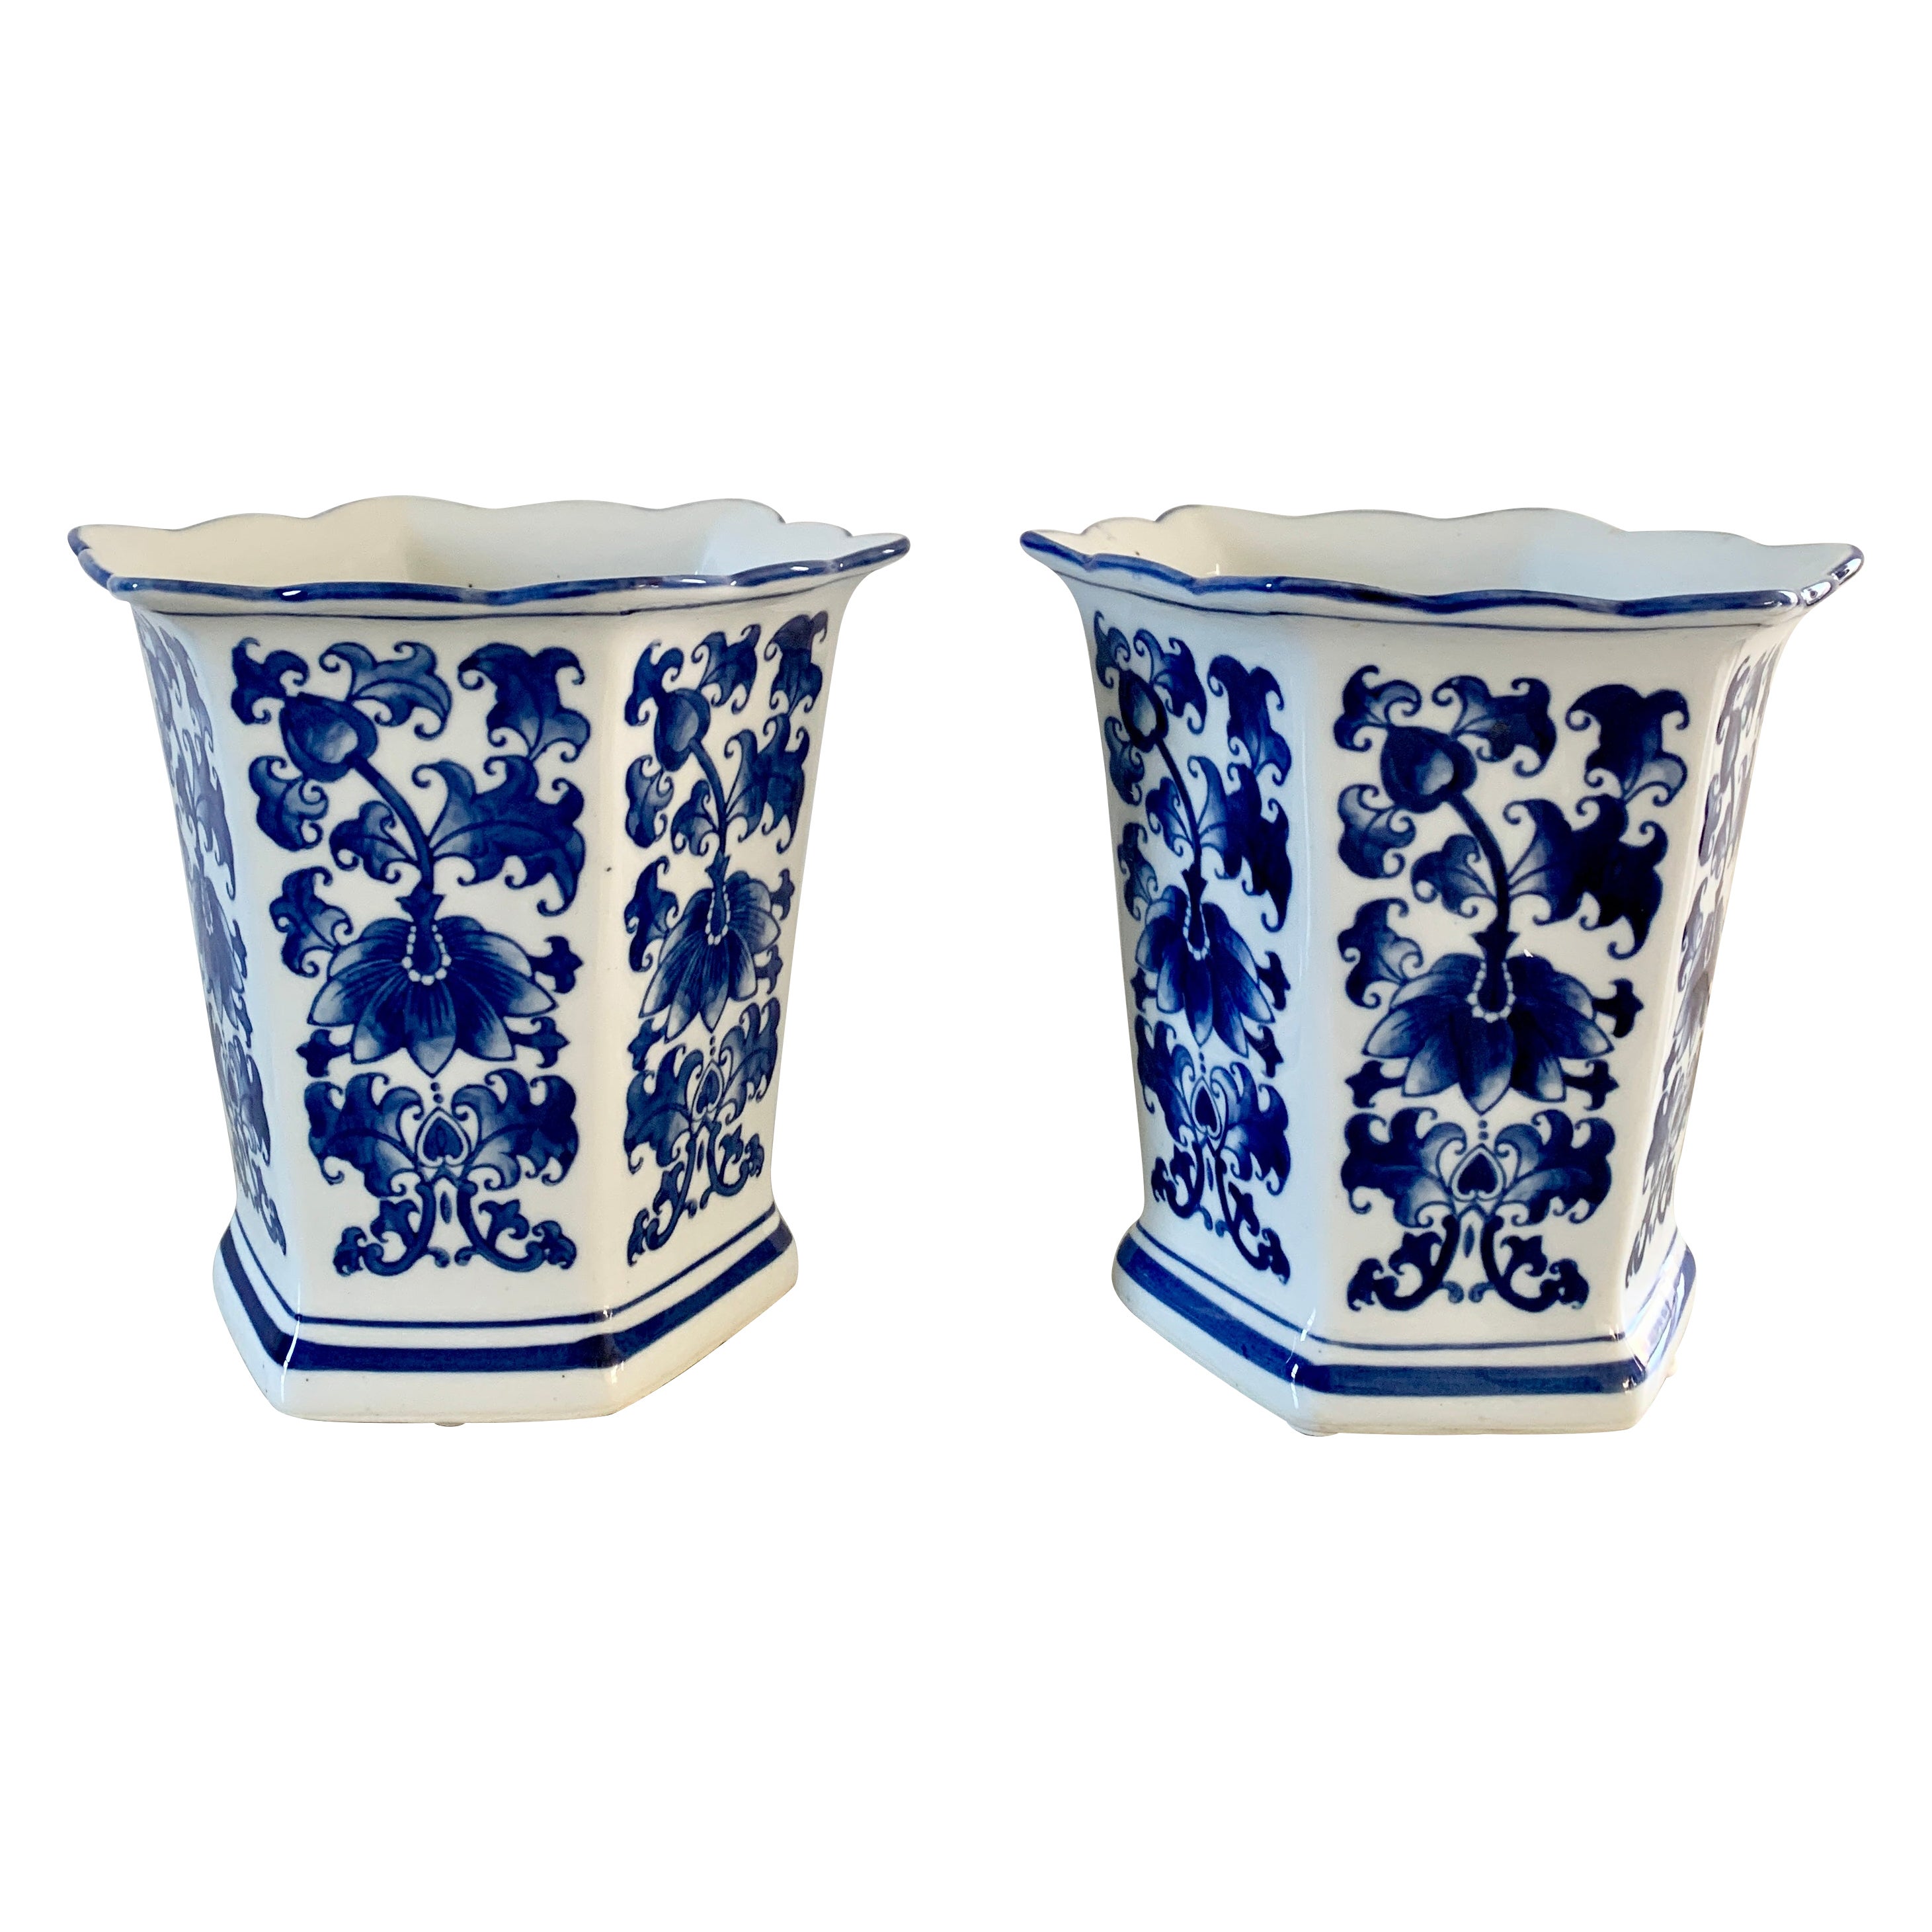 Chinoiserie Blue and White Porcelain Hexagonal Vases, Pair